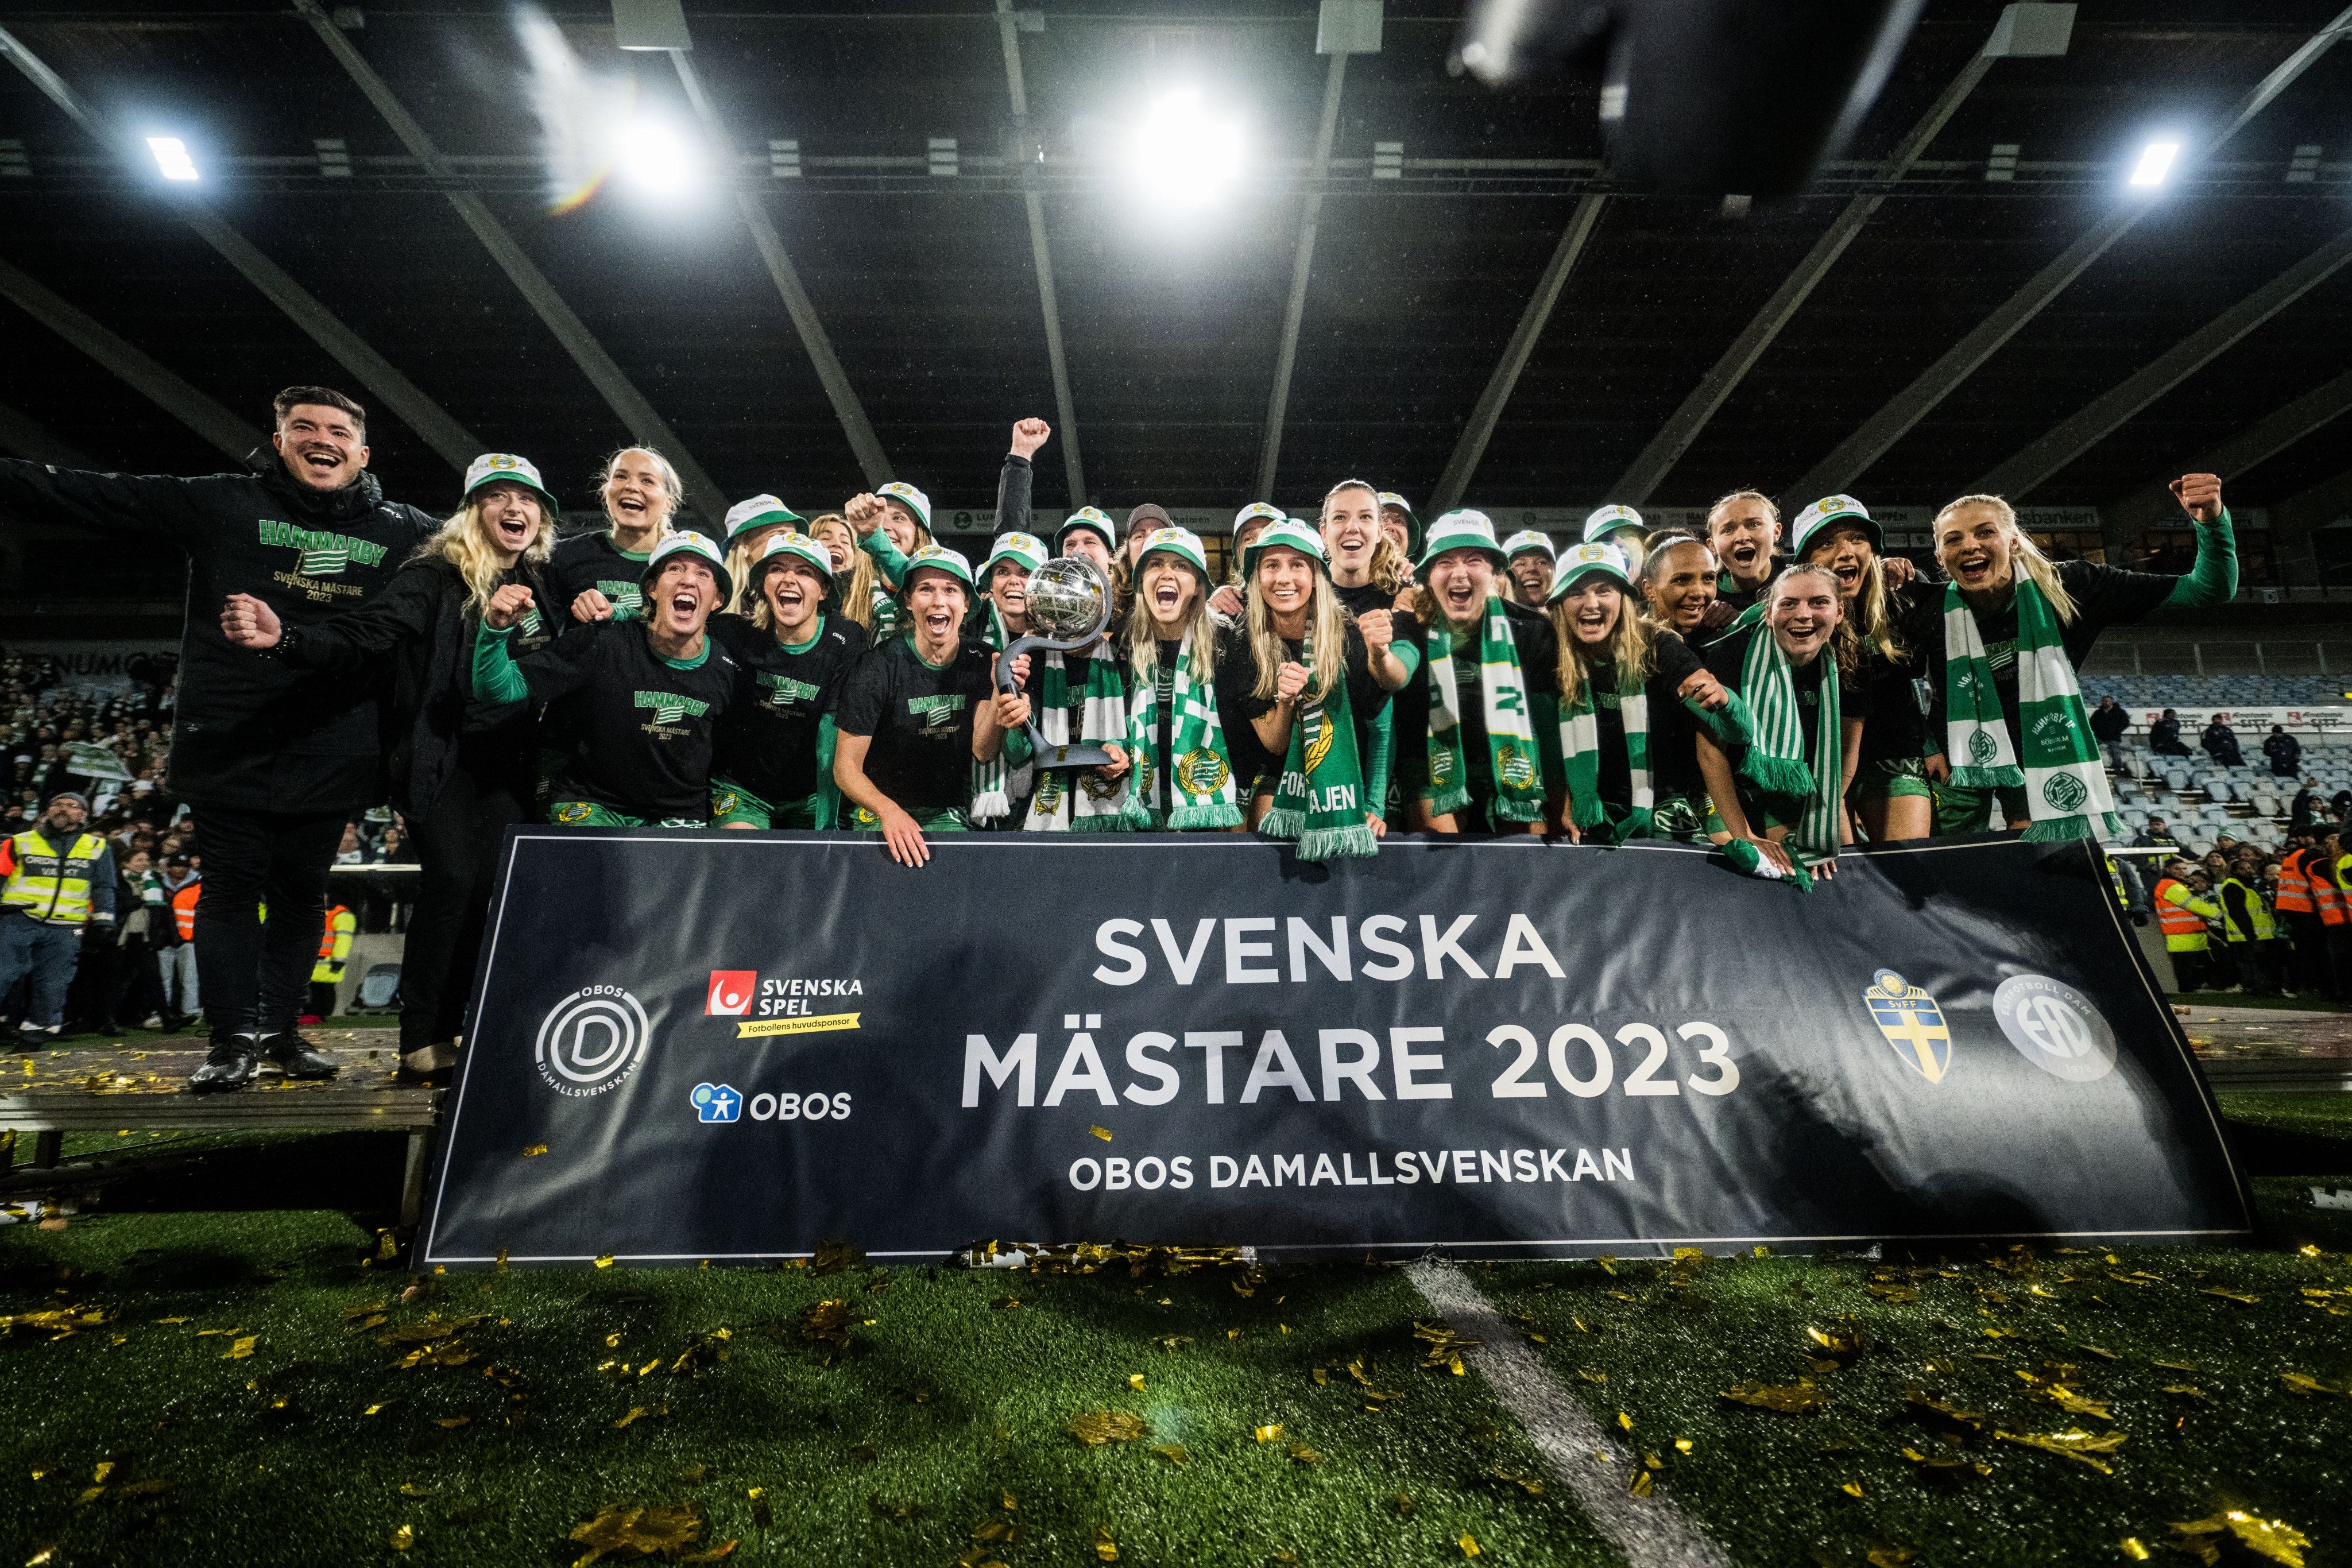 Hammarby win historic Damallsvenskan title after 38 year wait